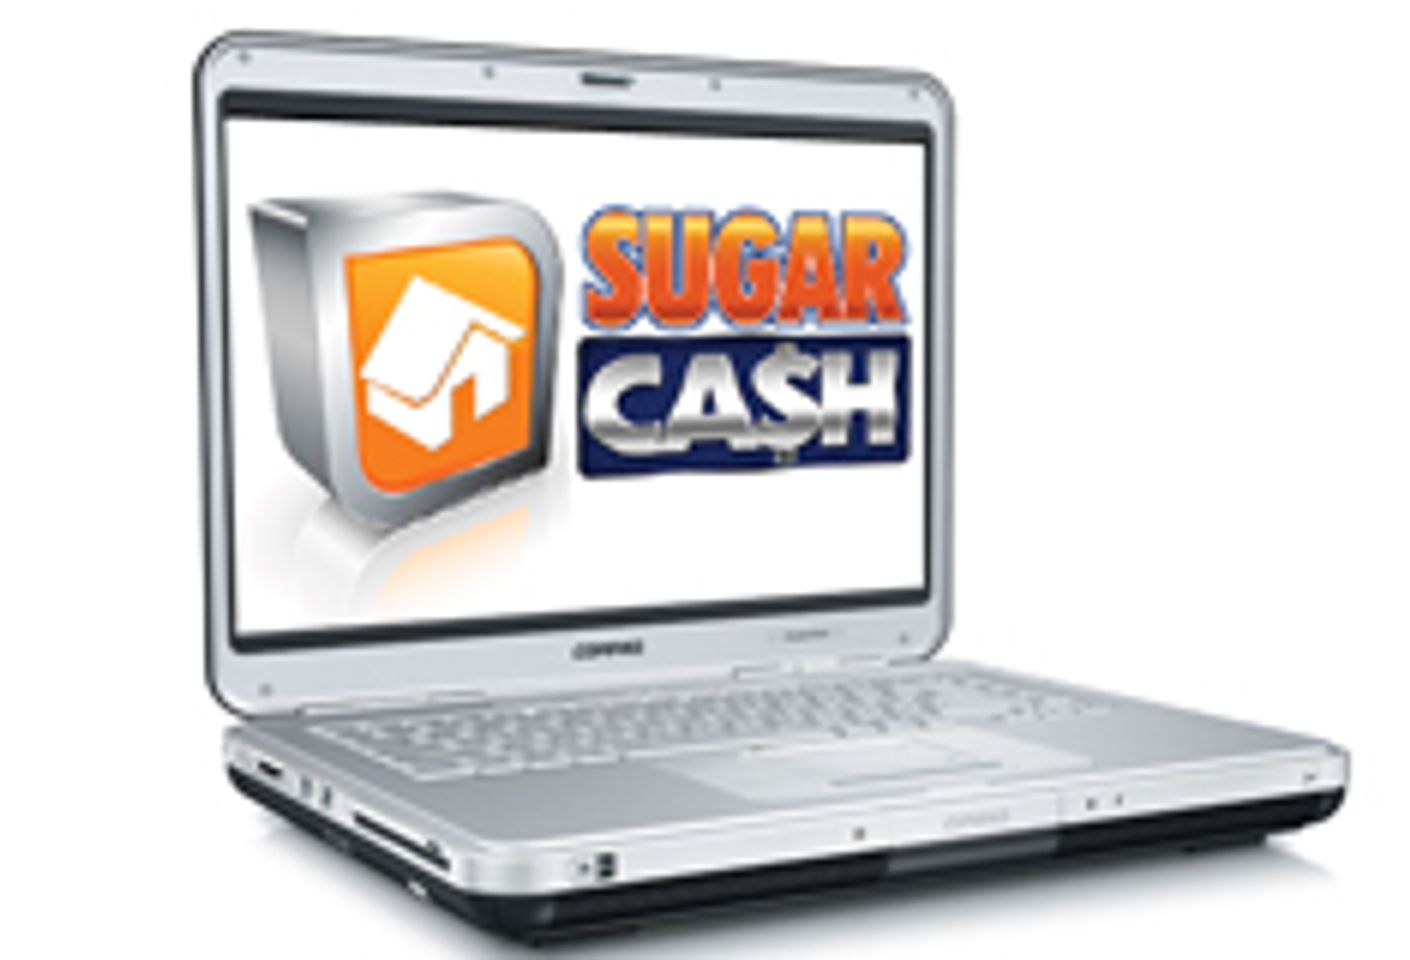 SugarCash Hires Danny A. as Sales Manager